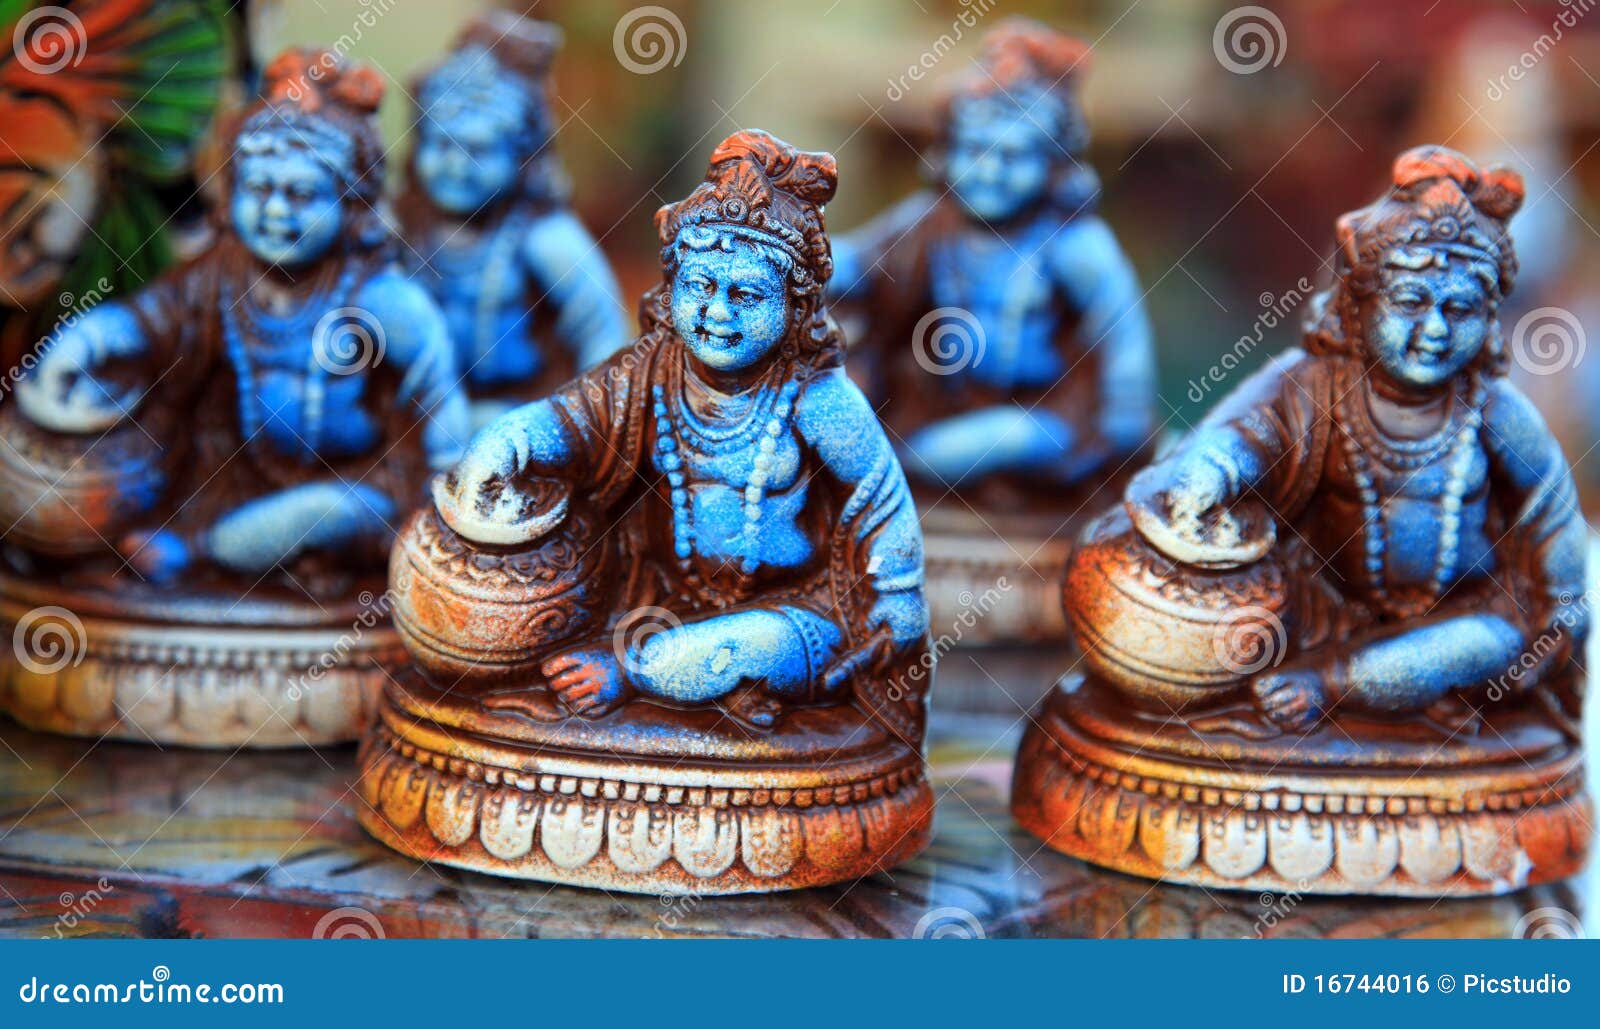 Bal Krishna in Photo Frame buy online from Om Pooja Shop